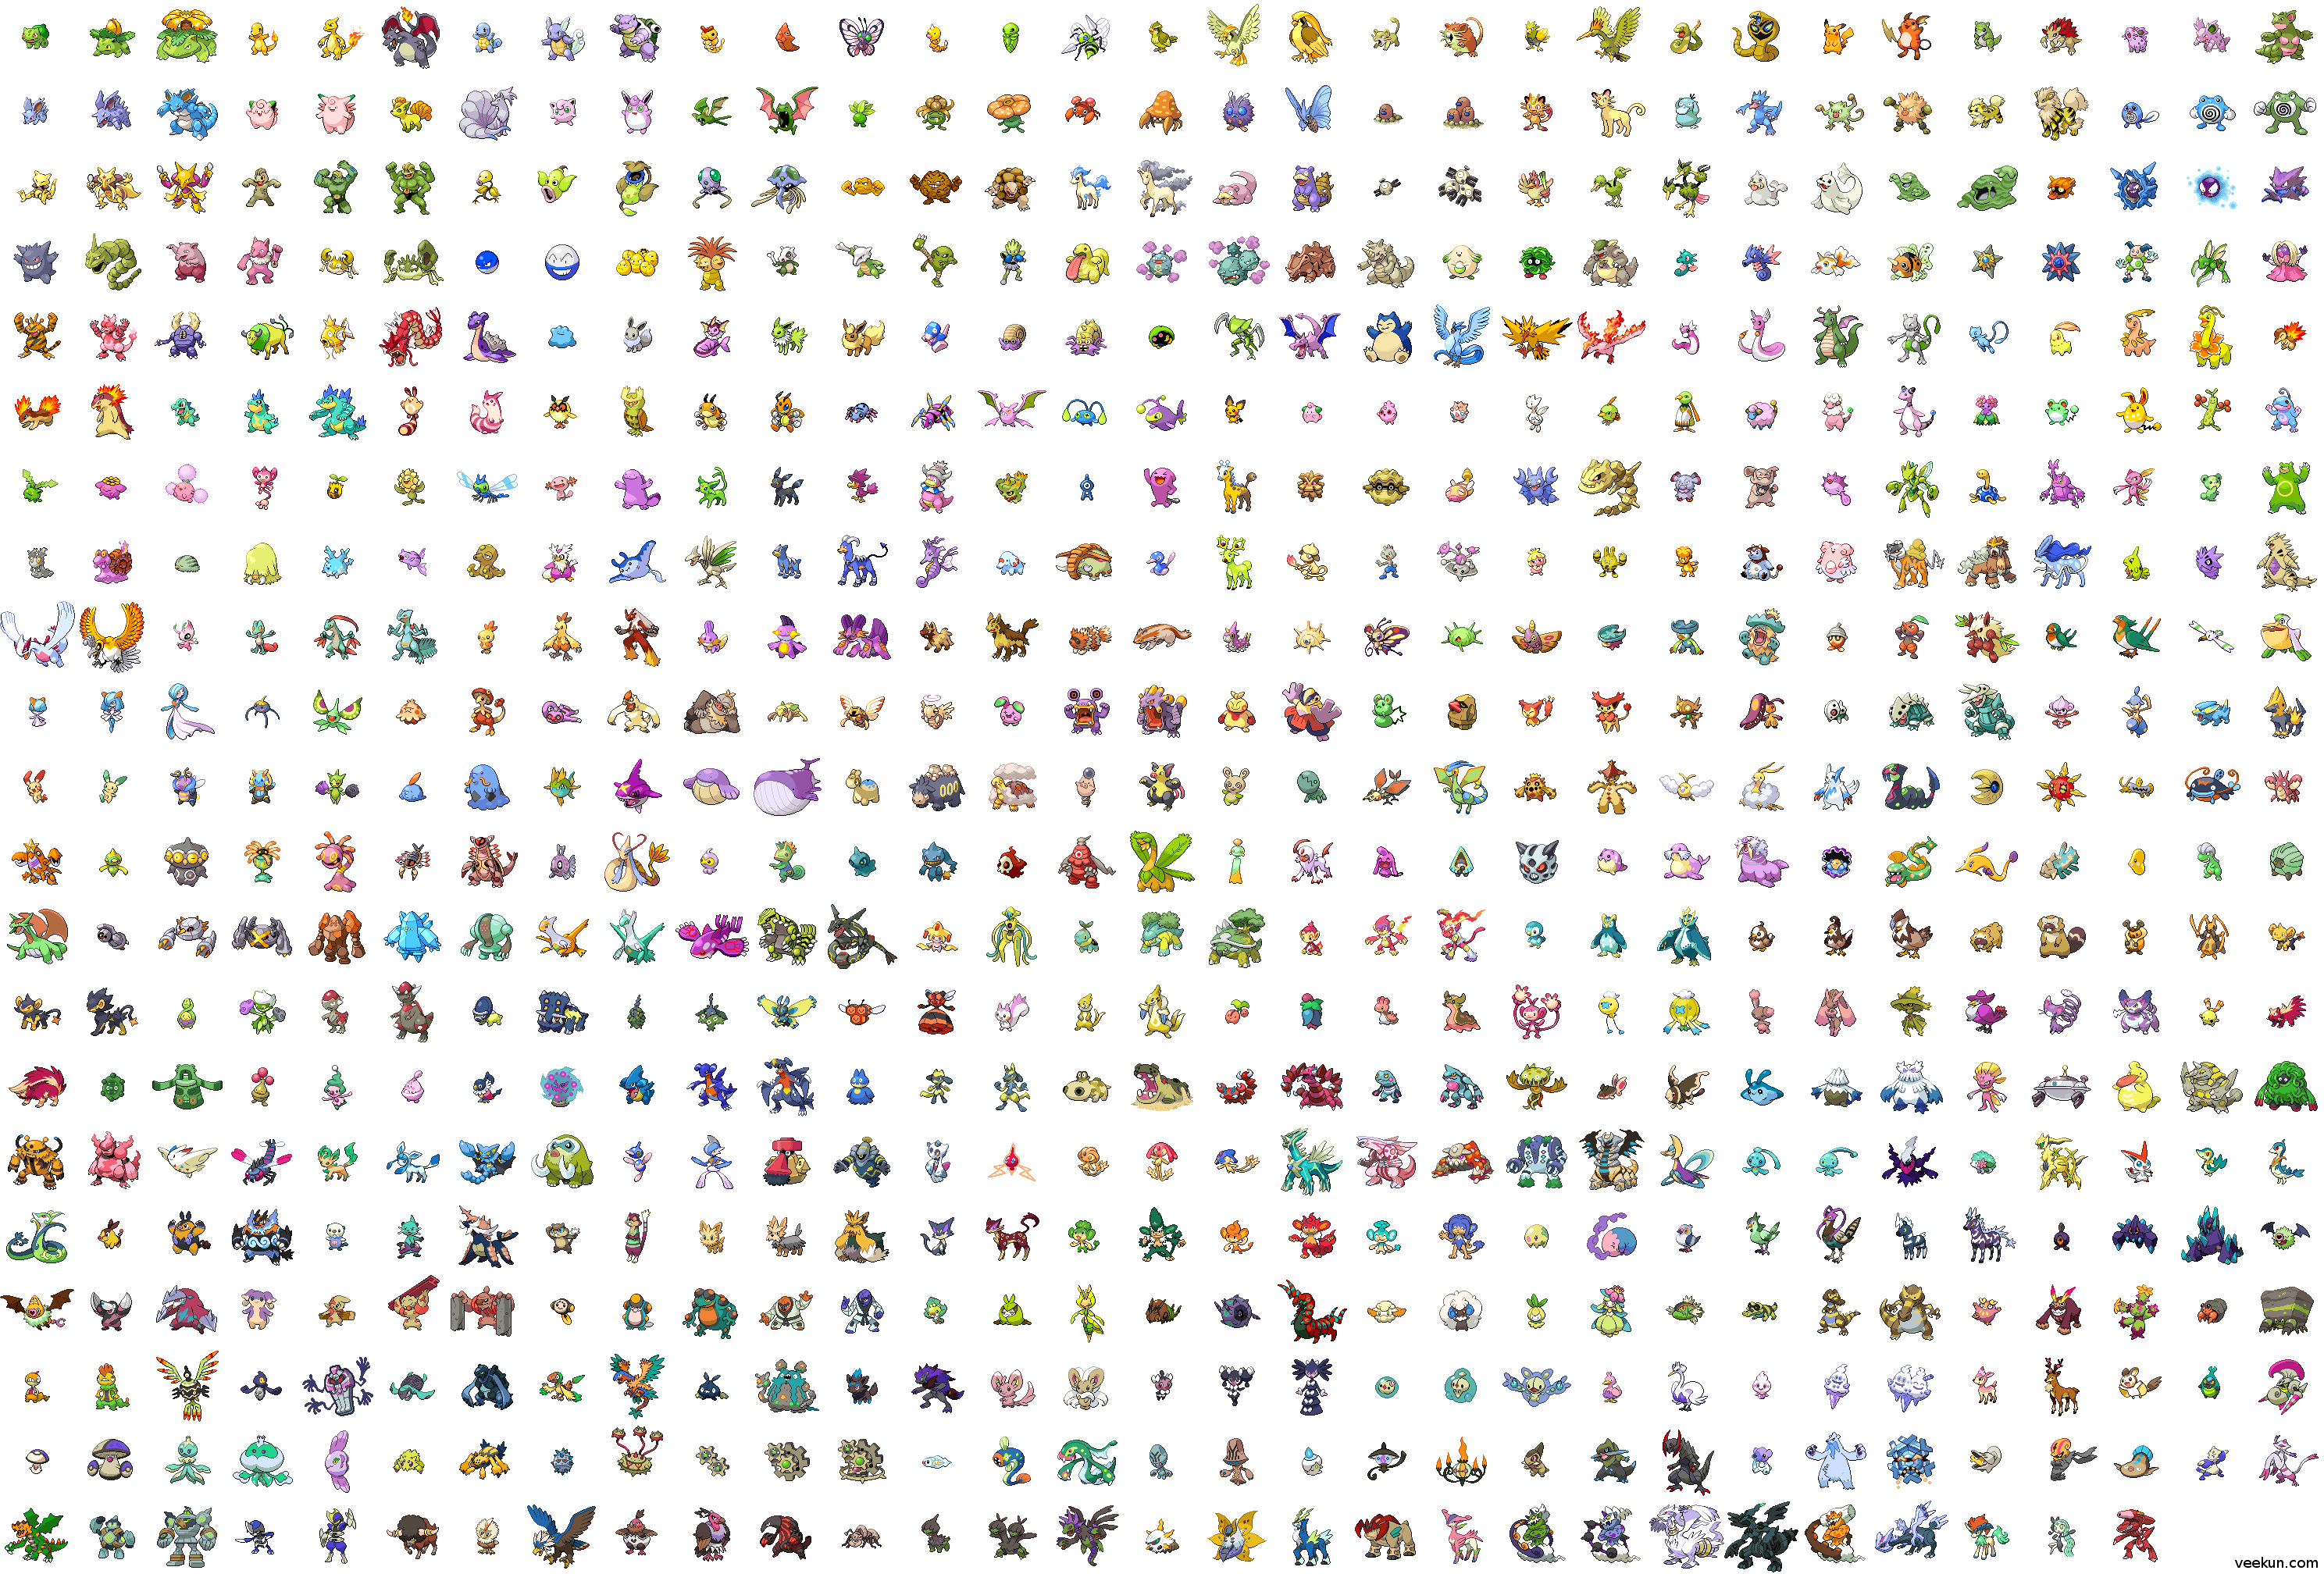 All Shiny Pokemon by SuperSimpsons on DeviantArt